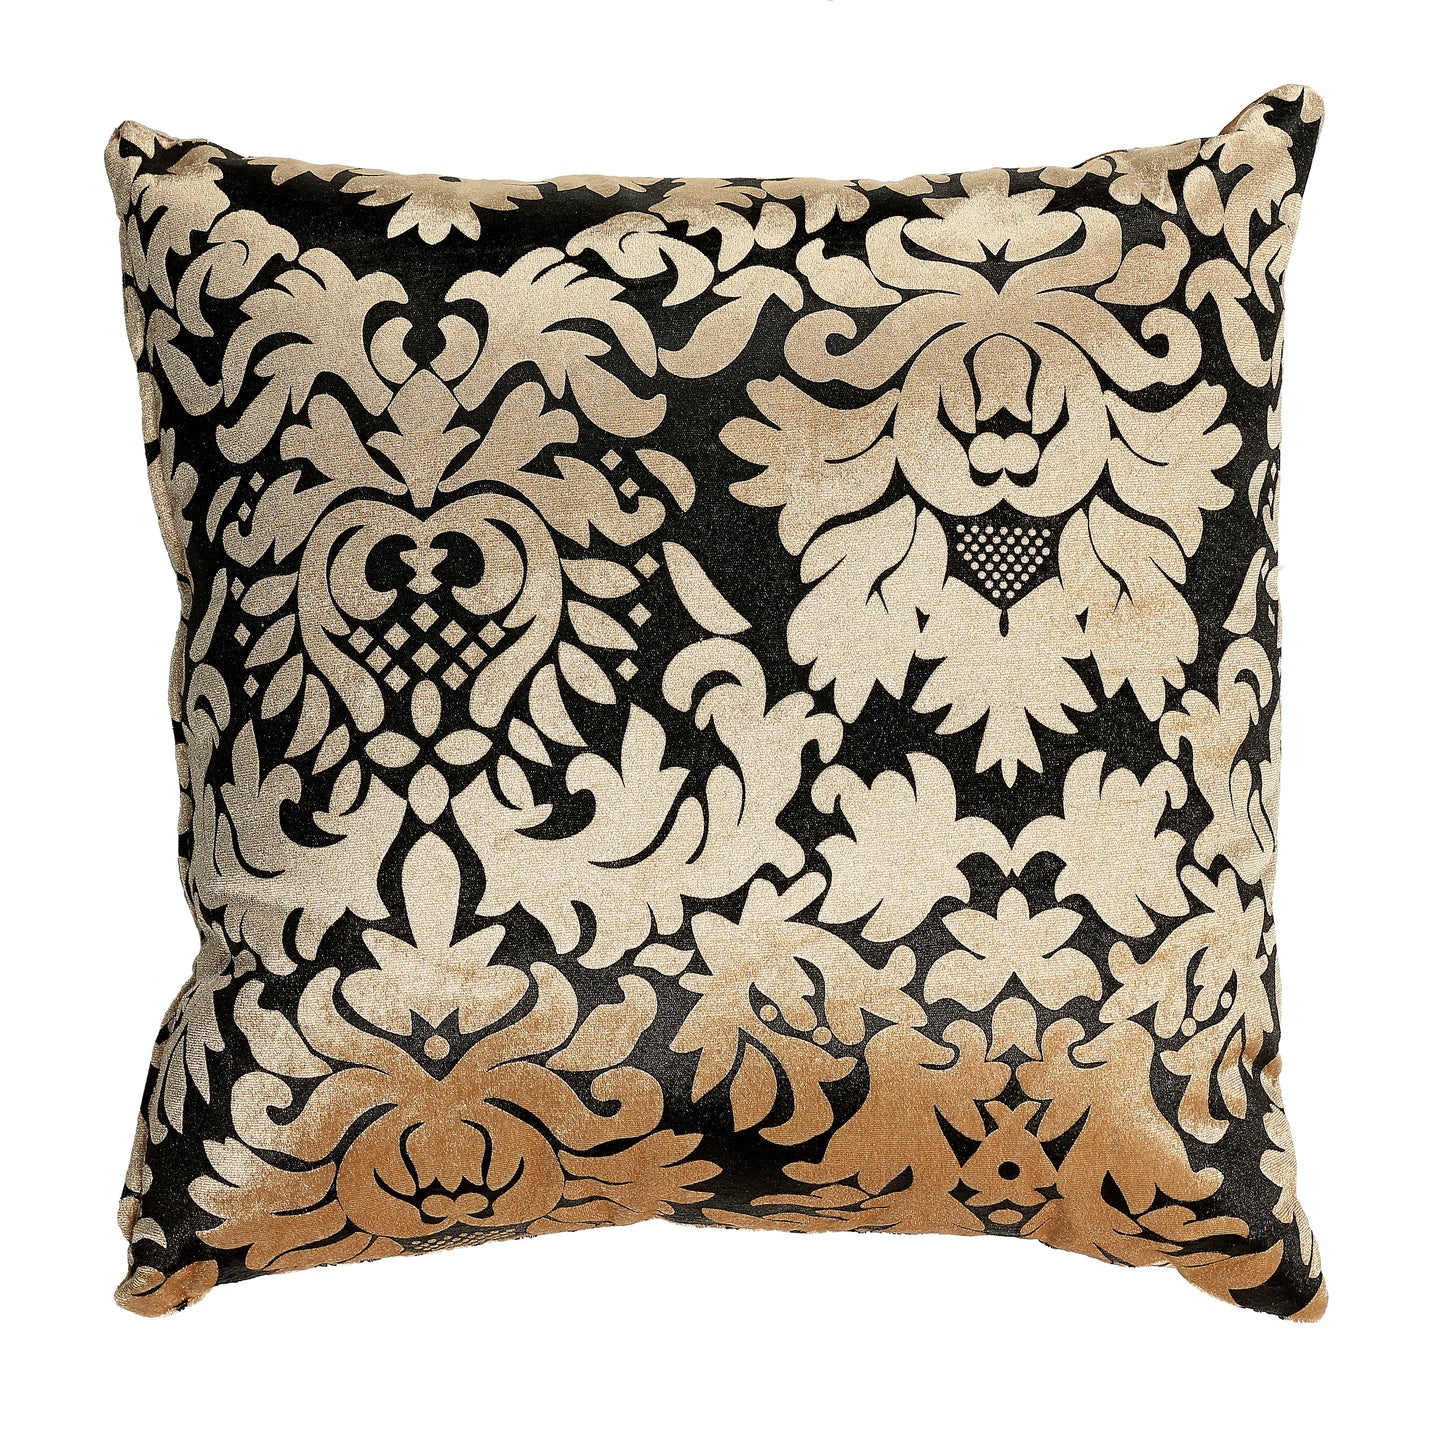 Cortesi Home Dama Decorative Damask Square Accent Pillow, Gold